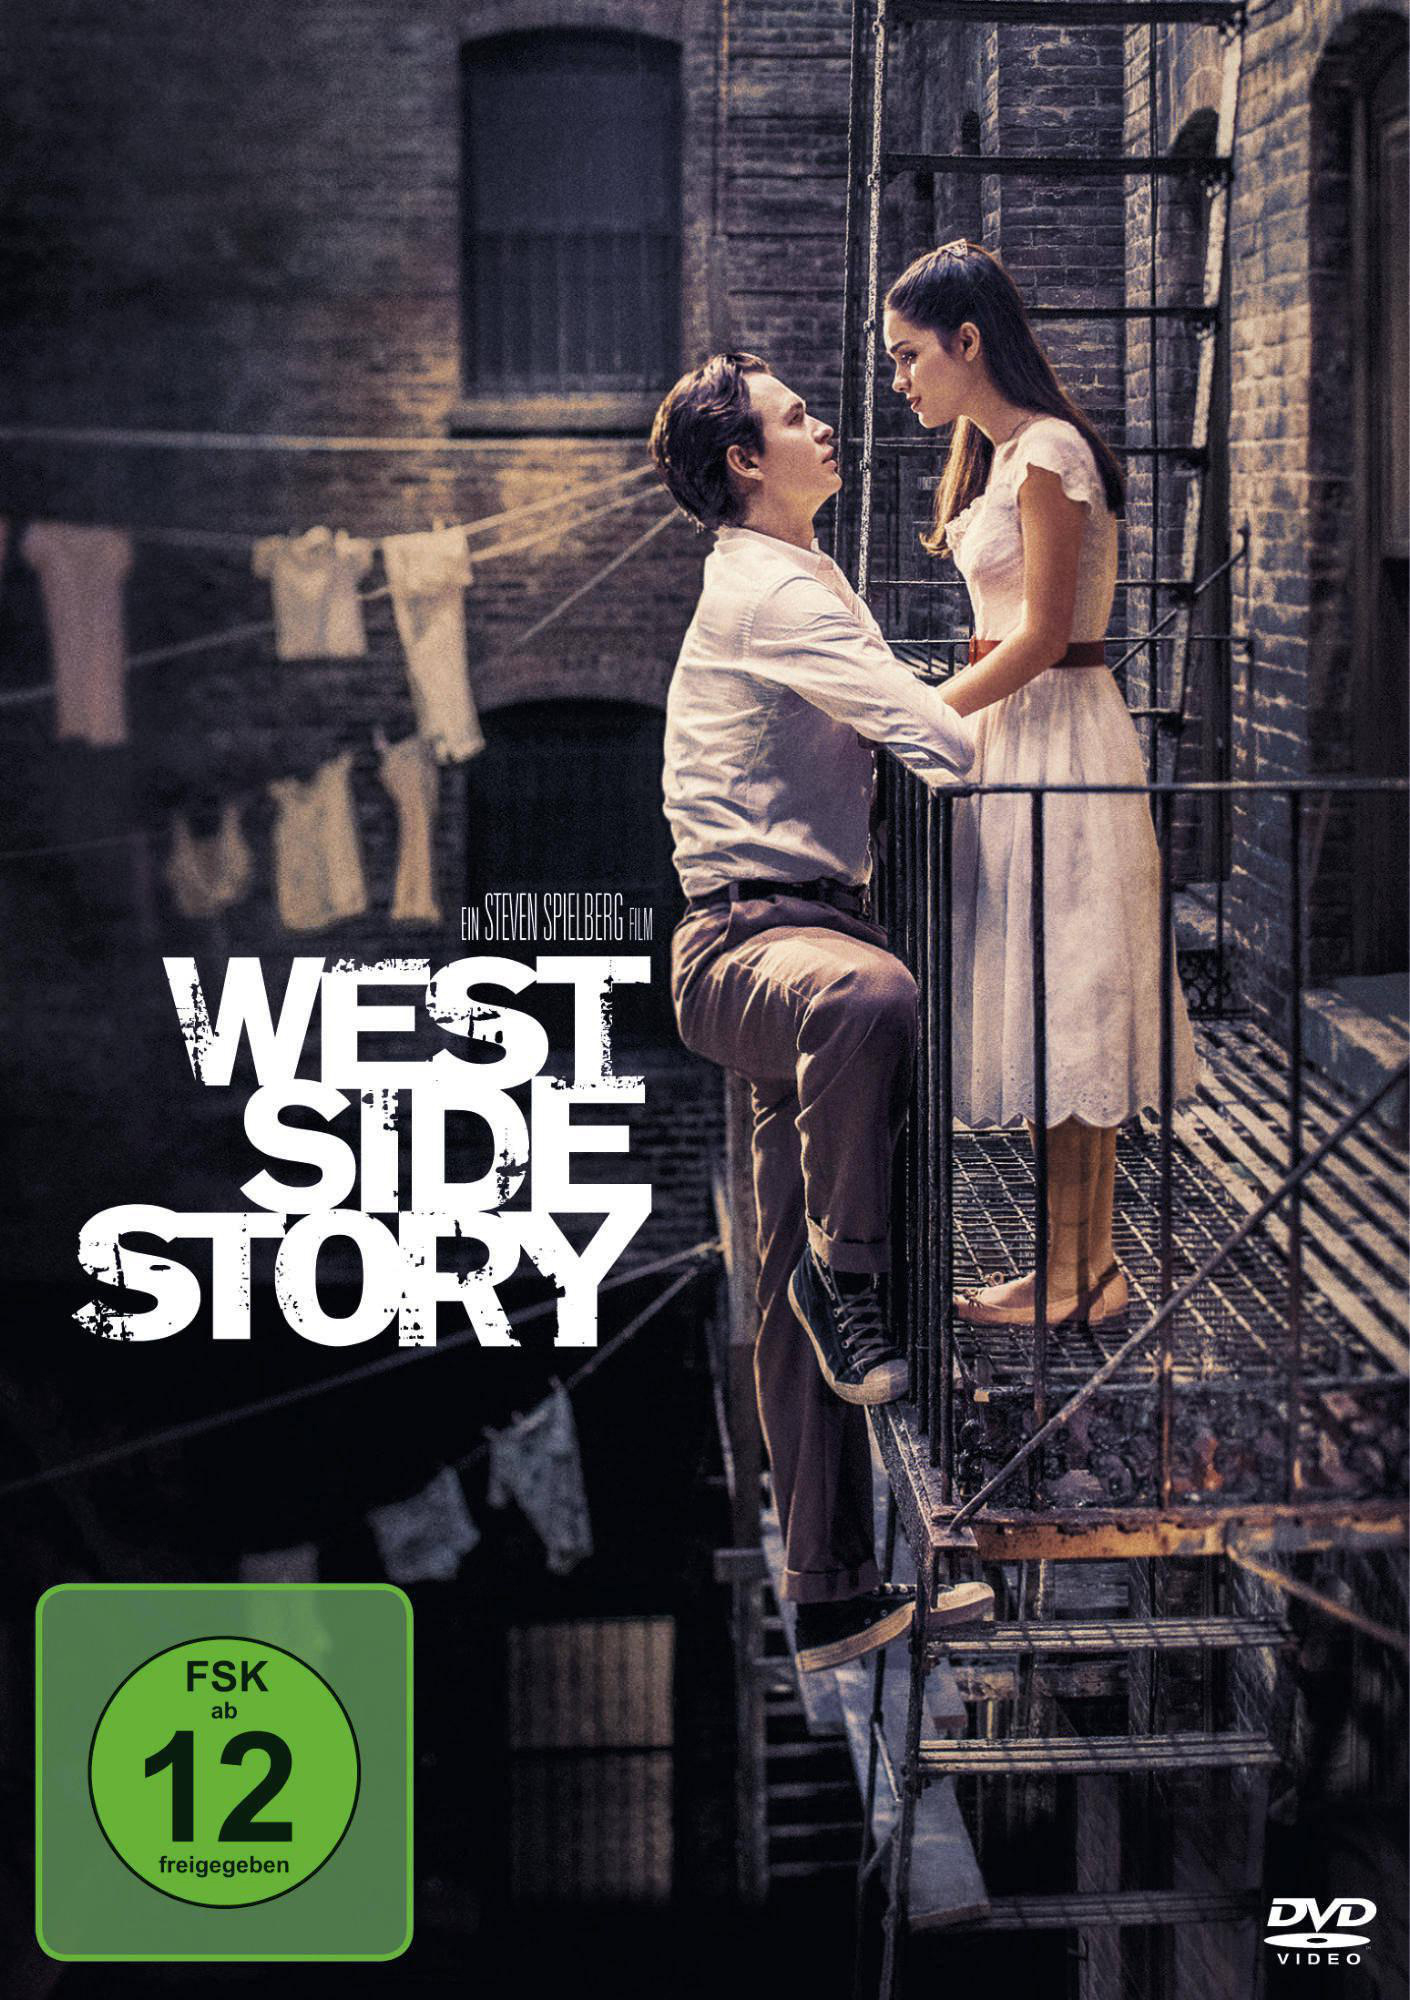 Story DVD Side West